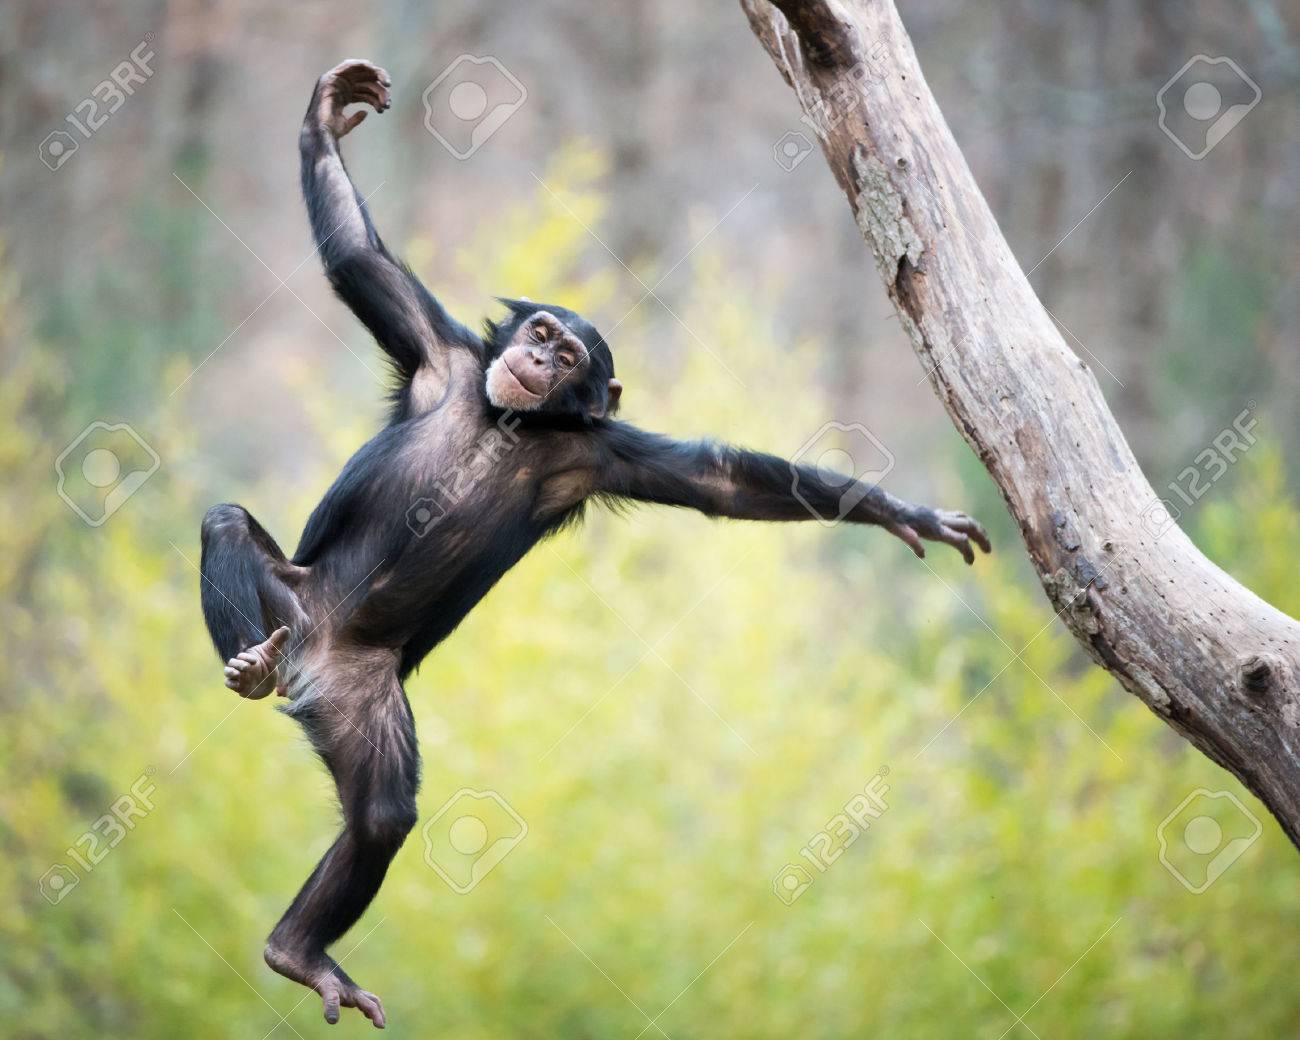 Swinging ape jpg